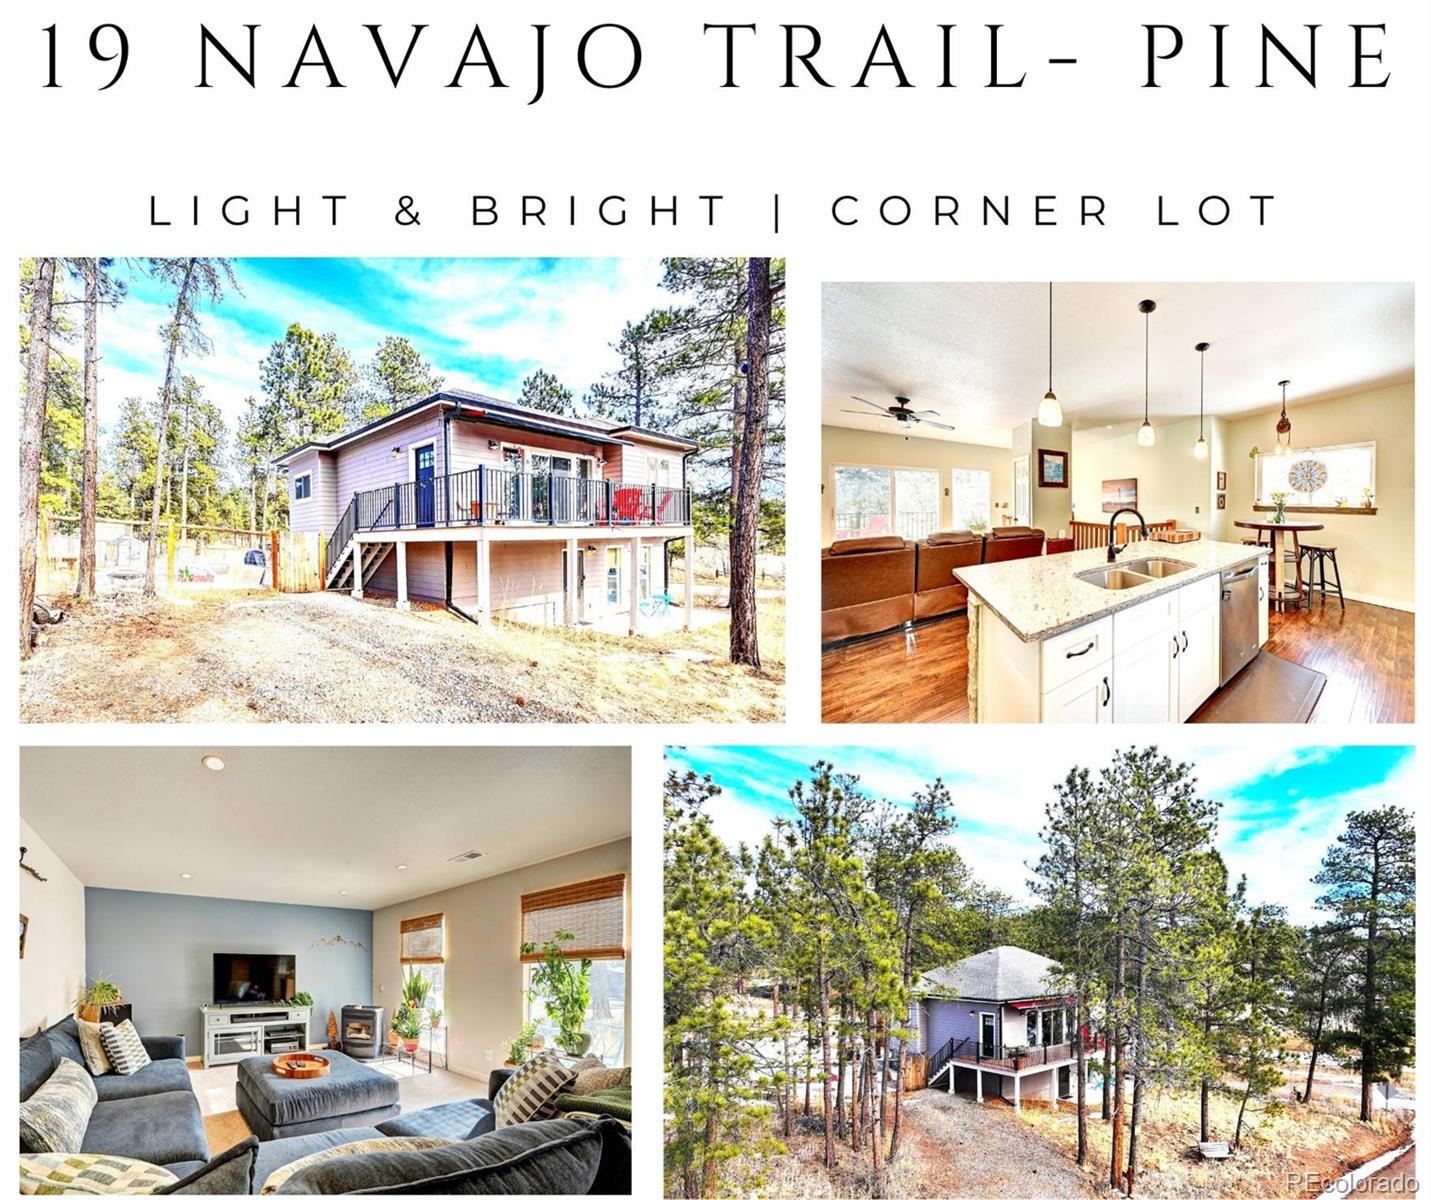 19  Navajo Trail, pine MLS: 7199197 Beds: 3 Baths: 2 Price: $625,000